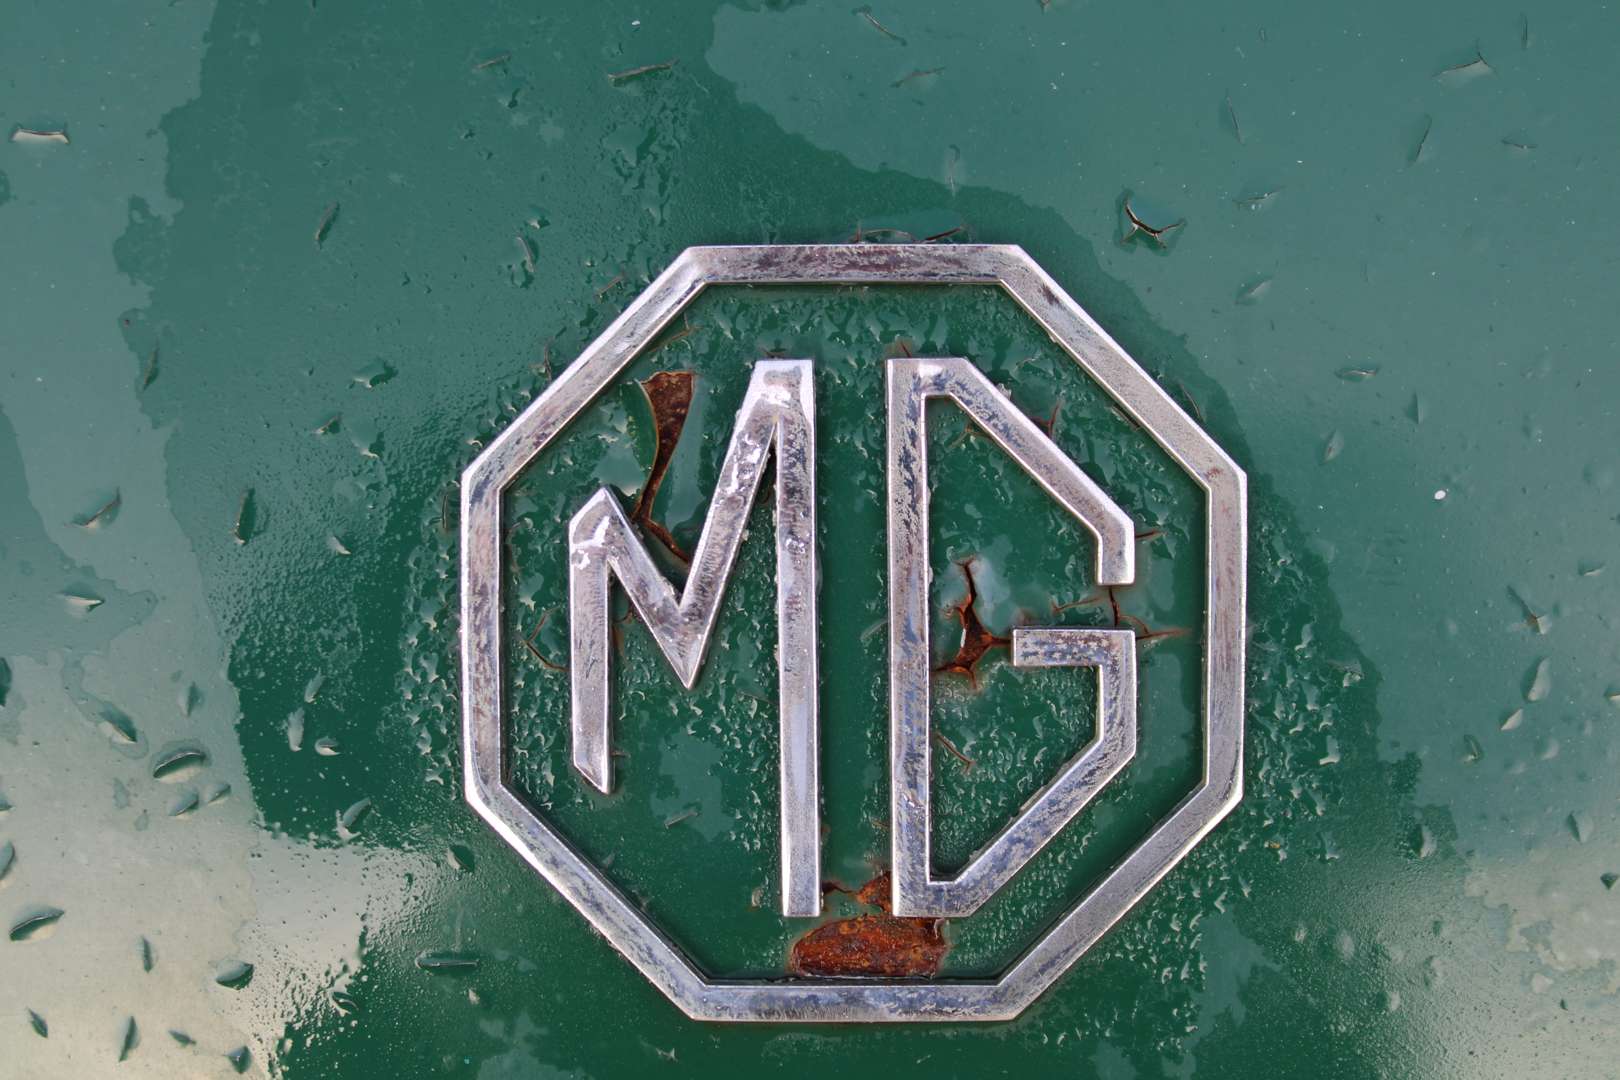 <p>1957 MG MAGNETTE</p>